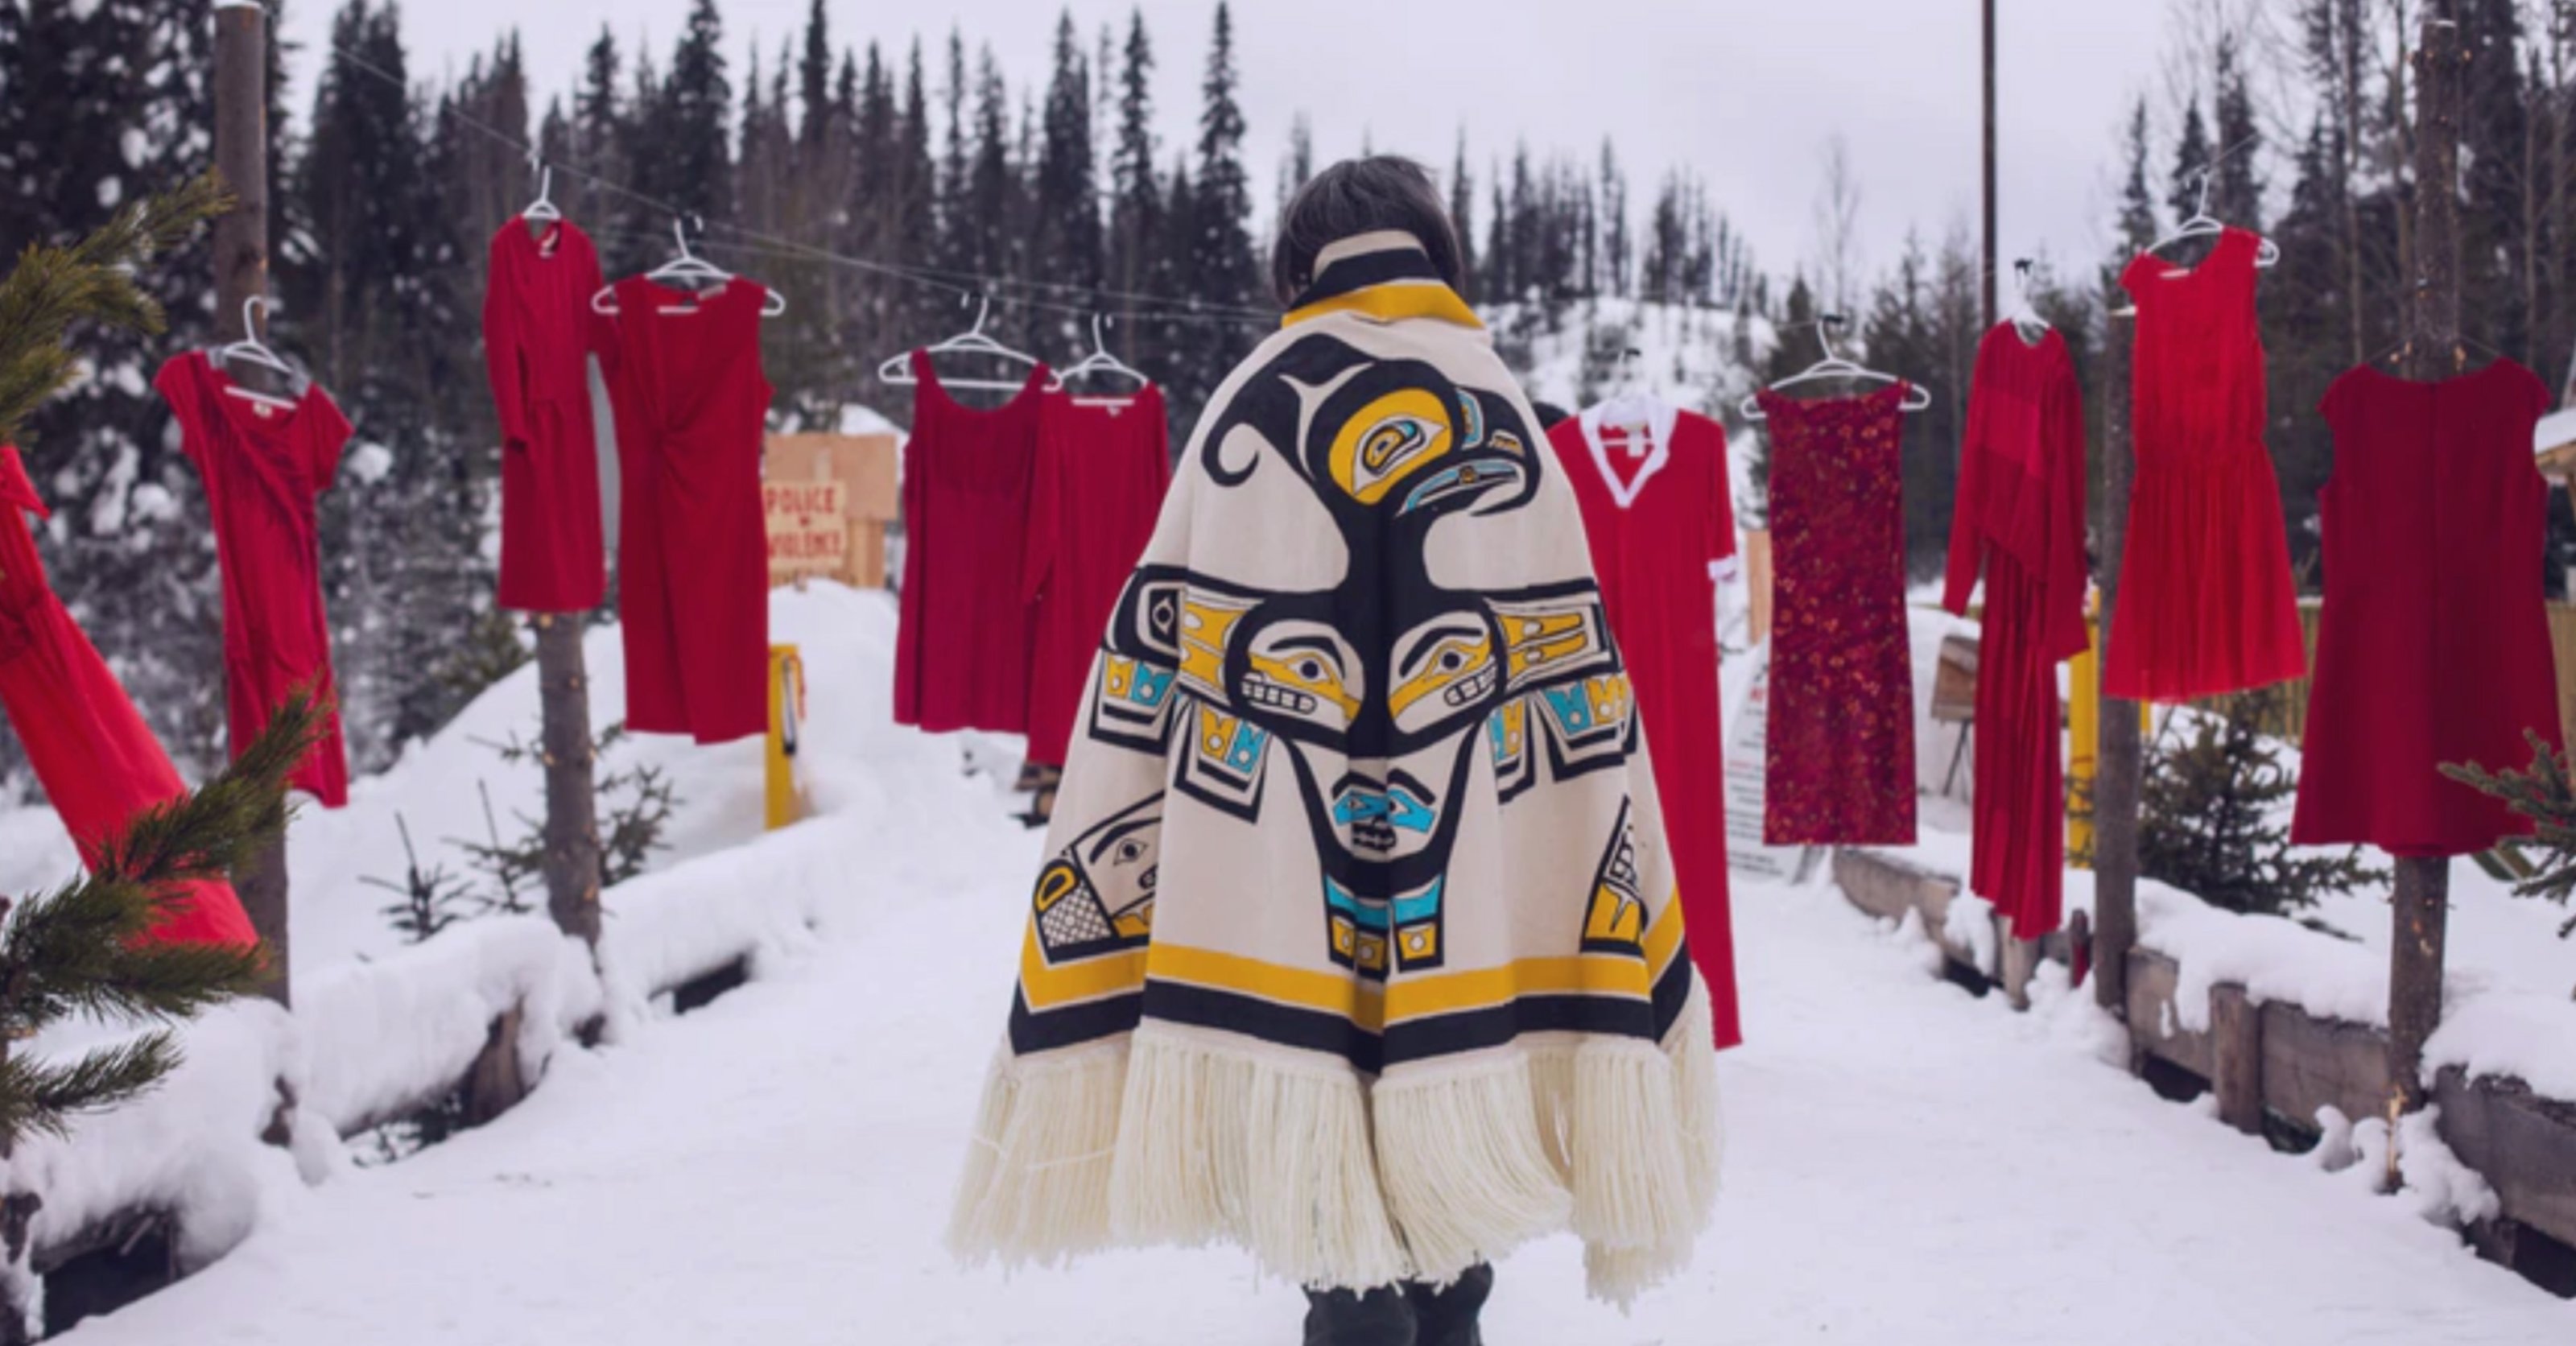 Ts’akë-ze’-Howihkat wearing Native ornamented coat, walking through red dresses hanging in air outdoors